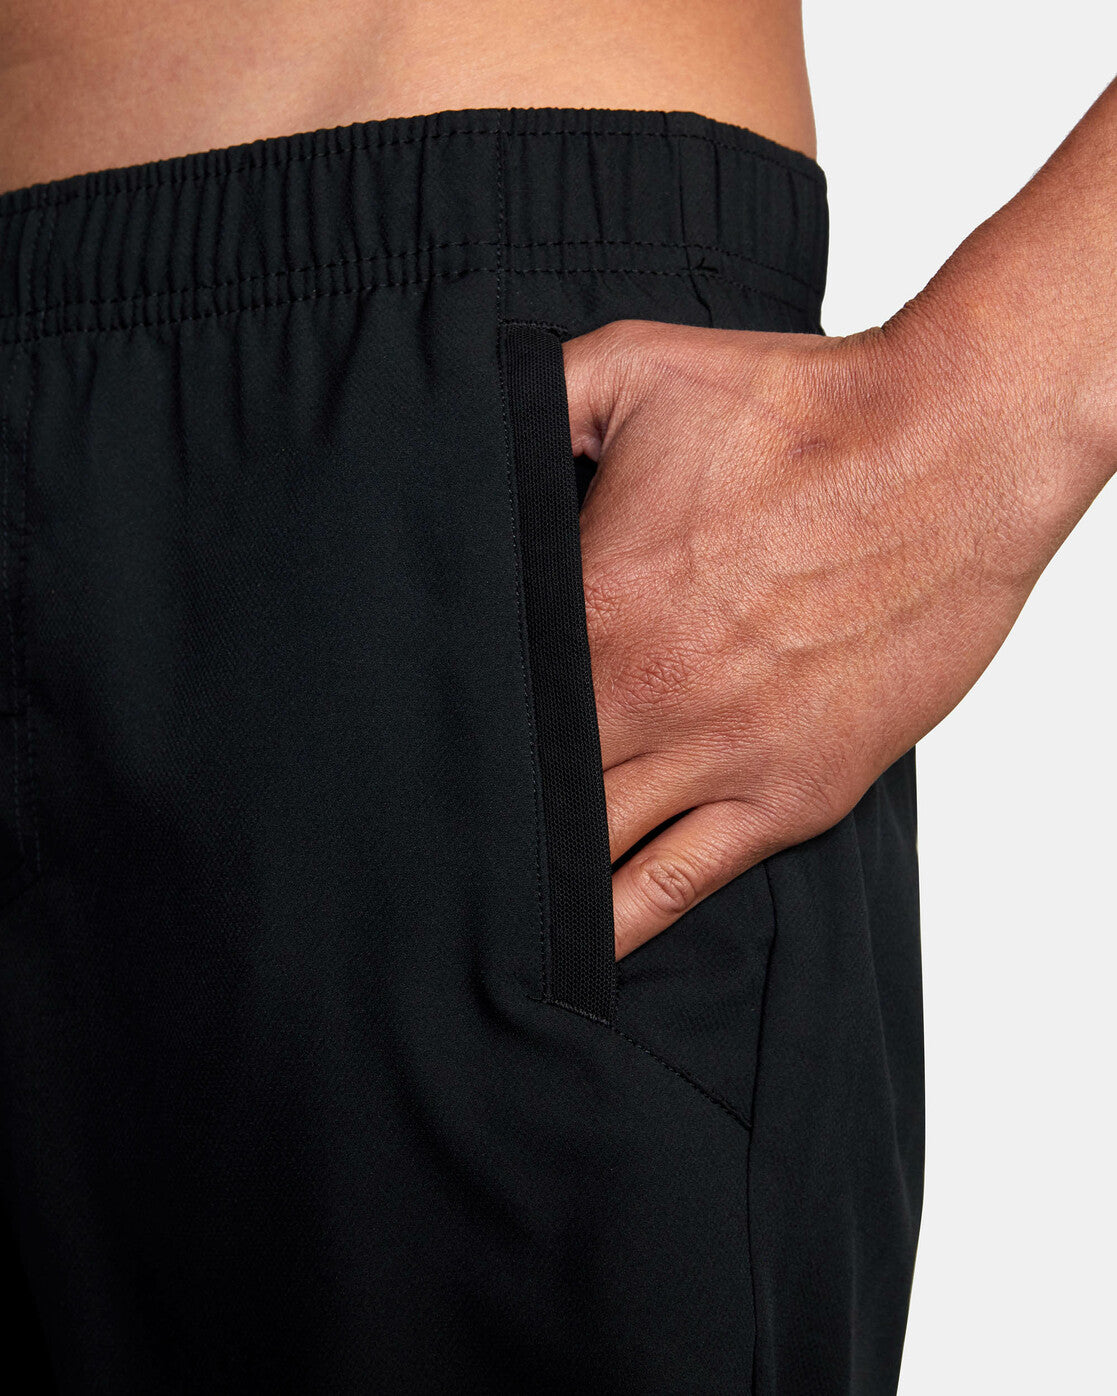 Pantalones cortos Rvca Sport Yogger IV Black